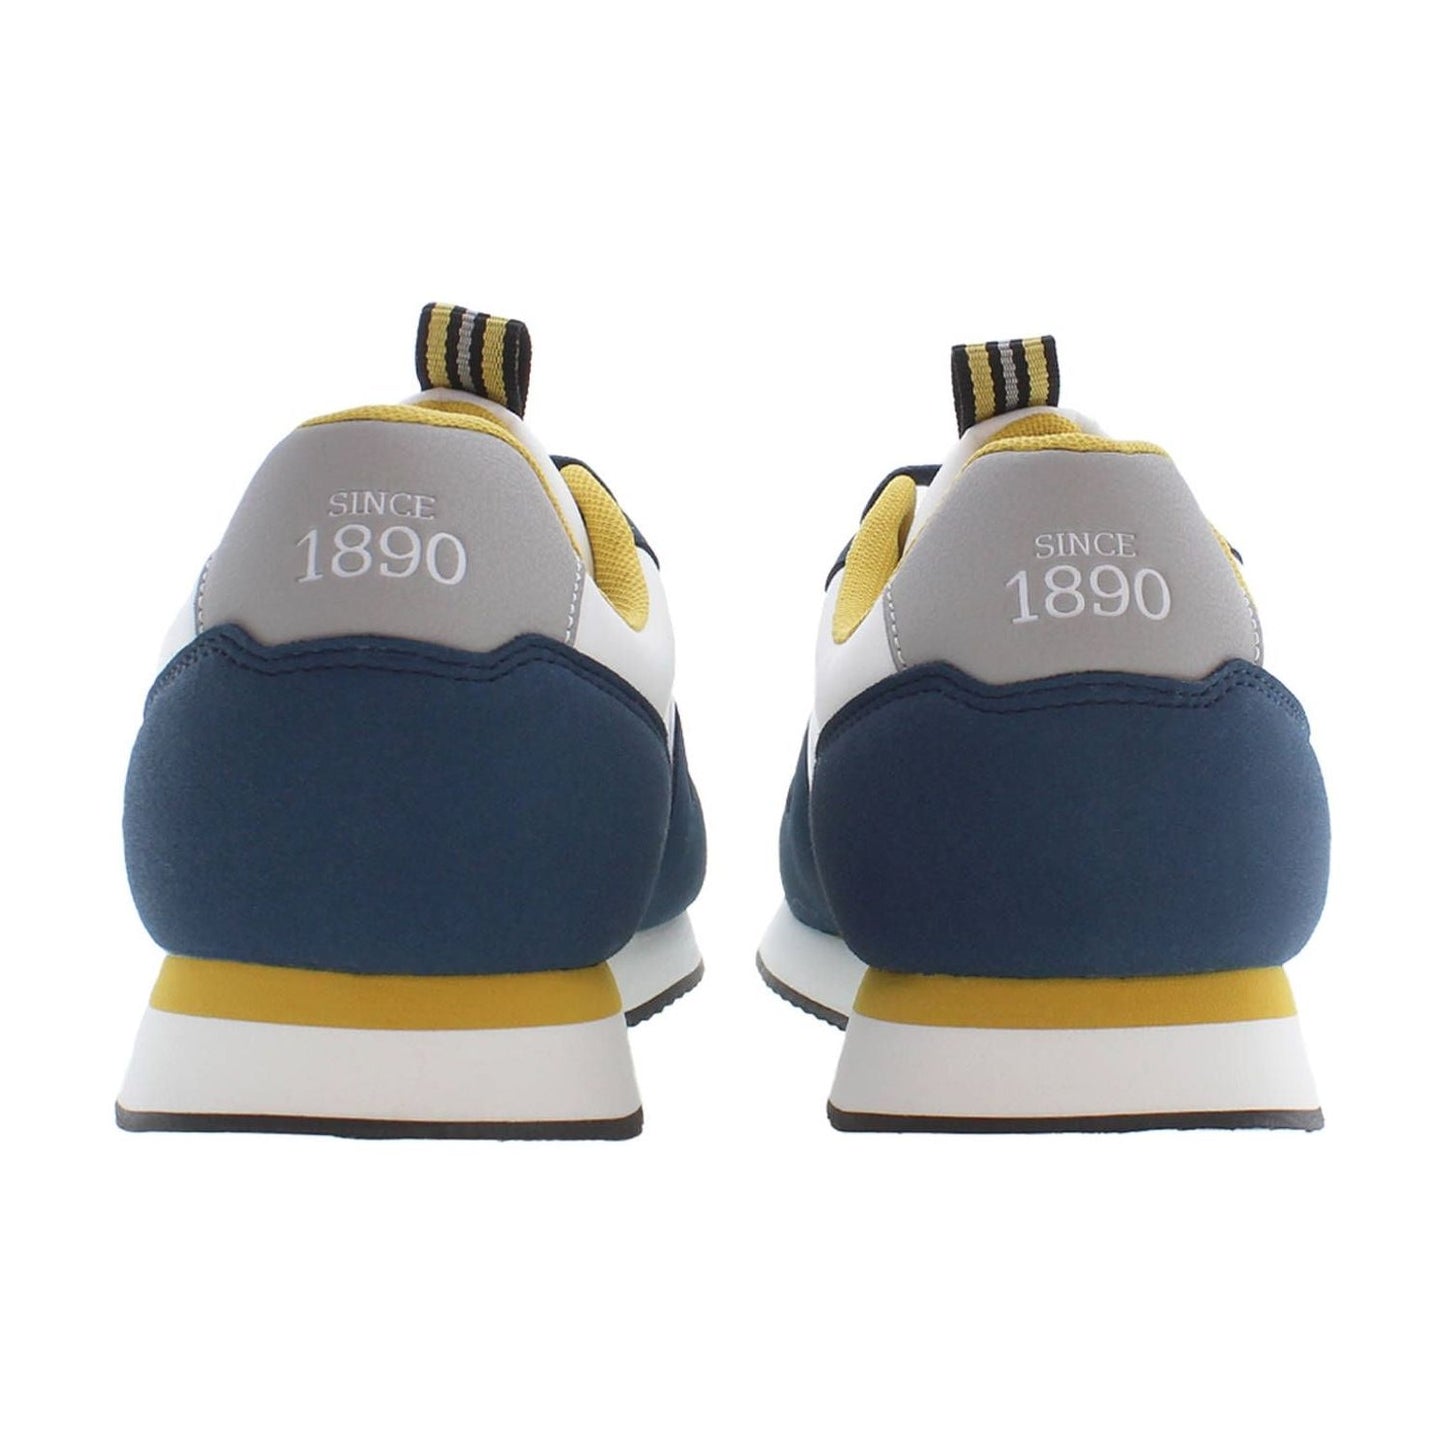 U.S. POLO ASSN.Sleek Blue Sneakers with Contrast DetailsMcRichard Designer Brands£89.00